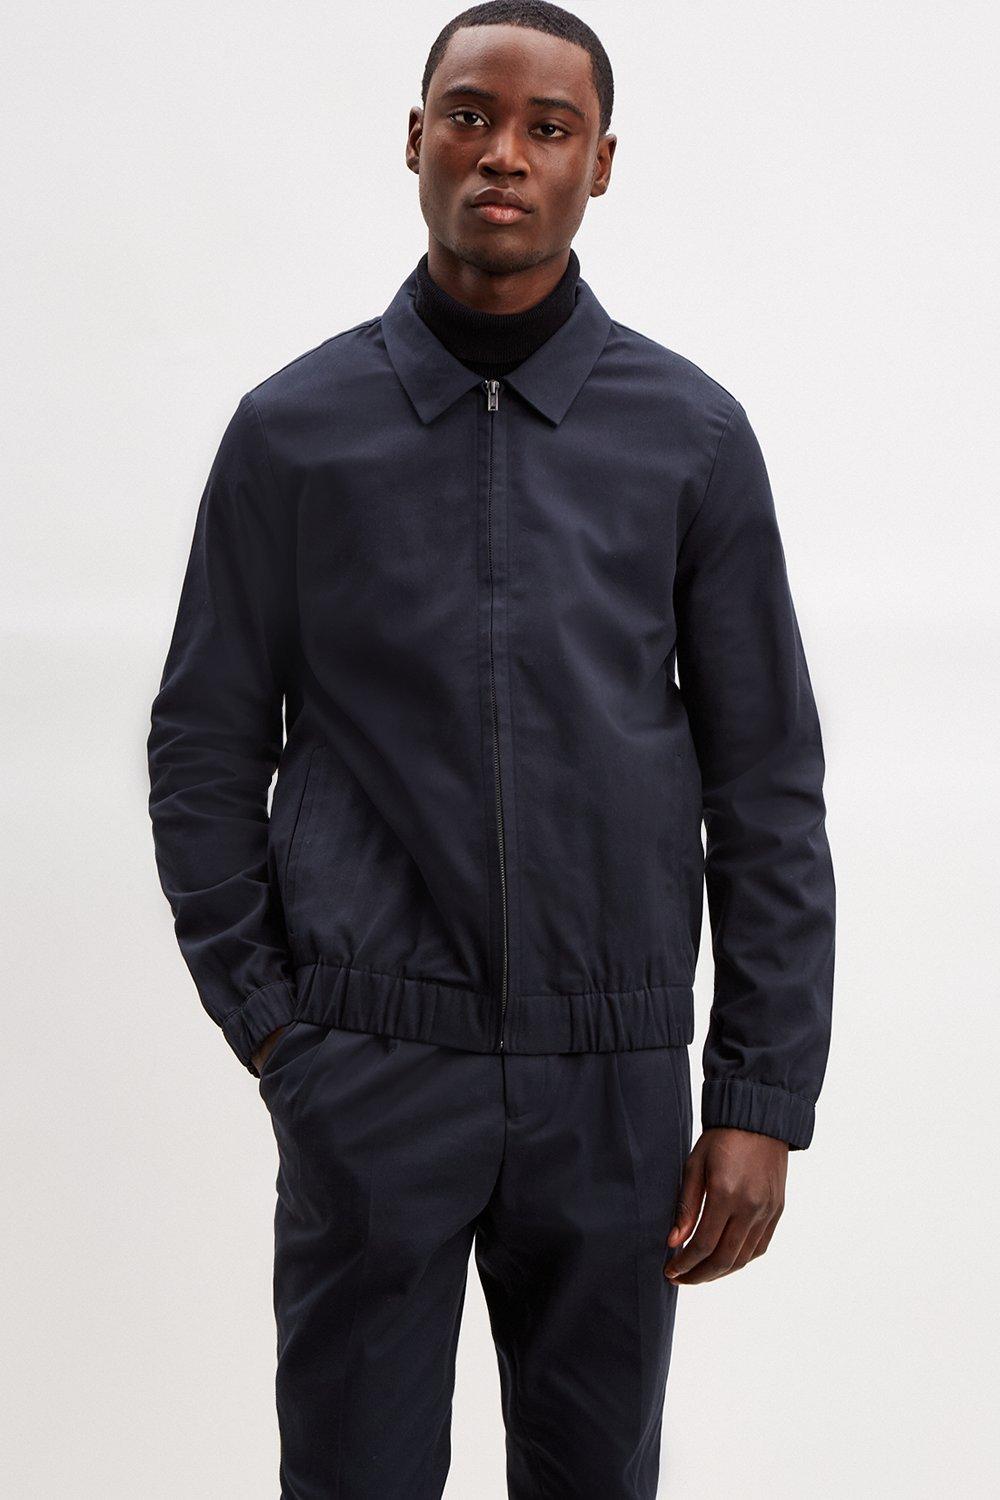 Jackets & Coats | Smart Collared Harrington | Burton